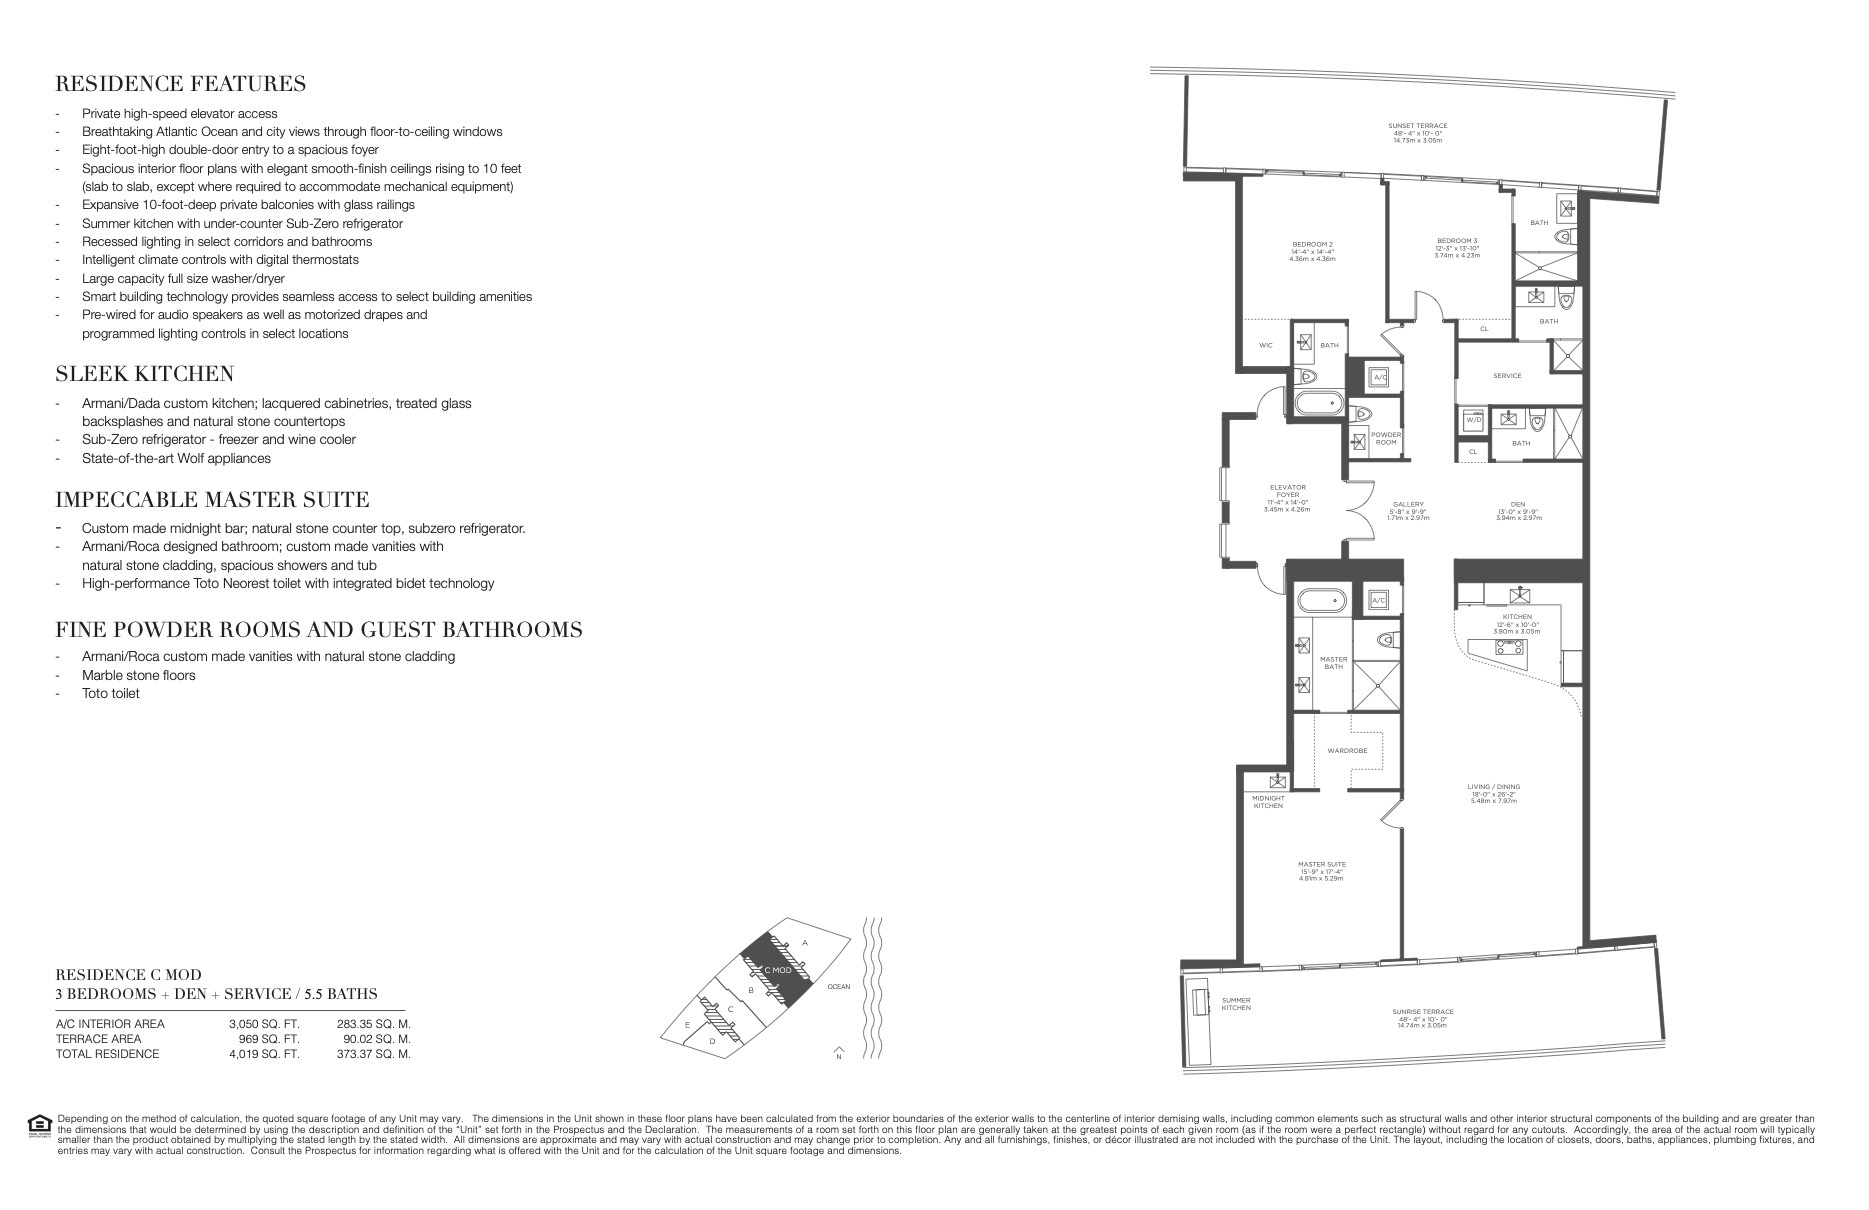 Floor Plan for Residences by Armani Casa Floorplans, Residence C Mod